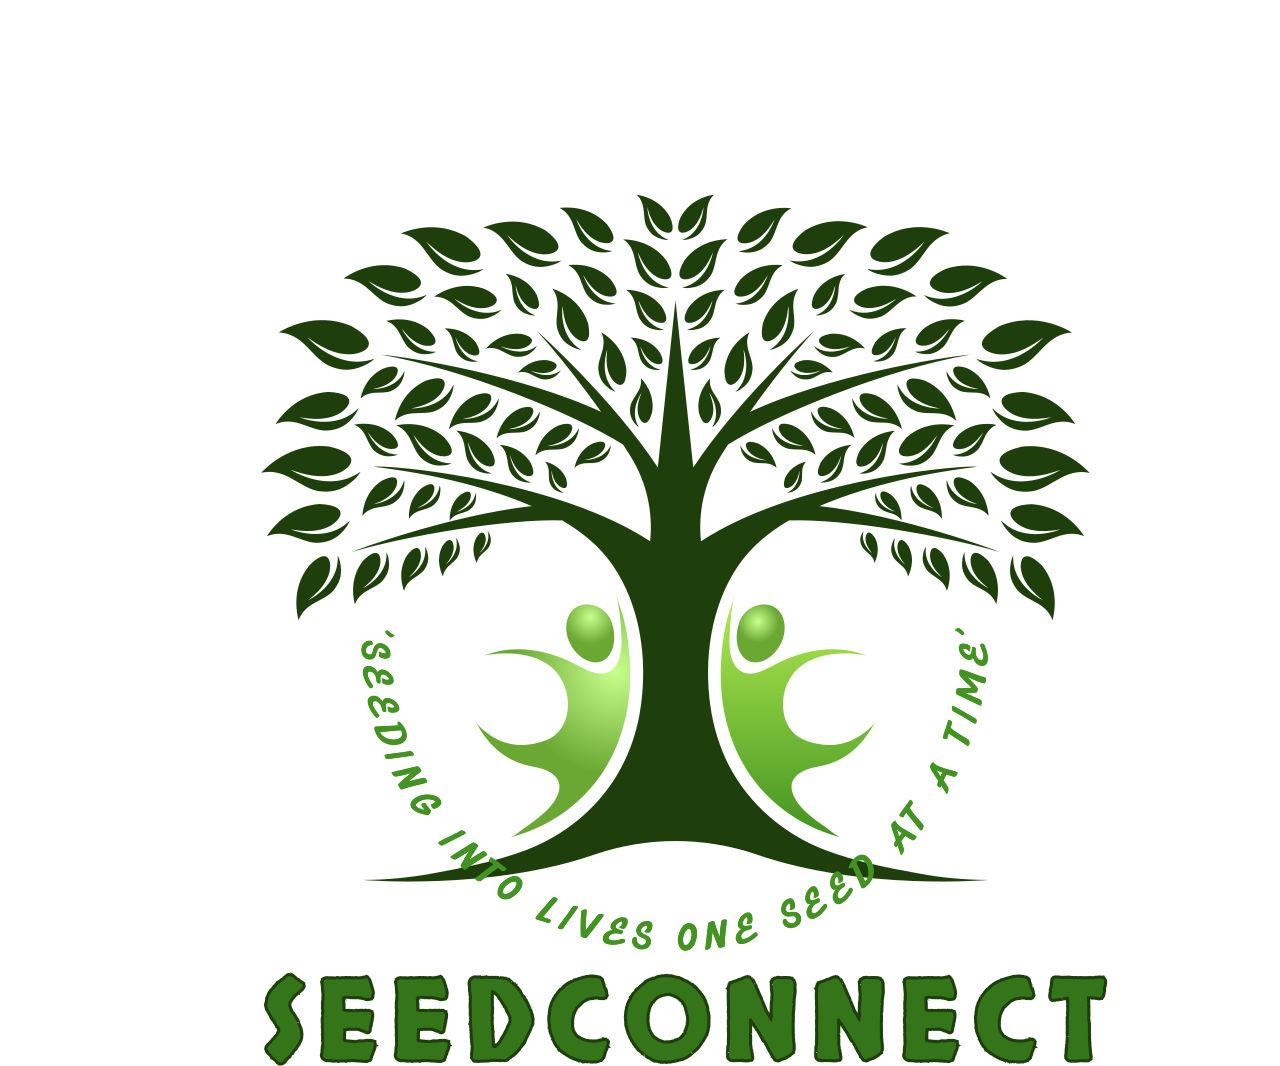 SEEDCONNECT's logo